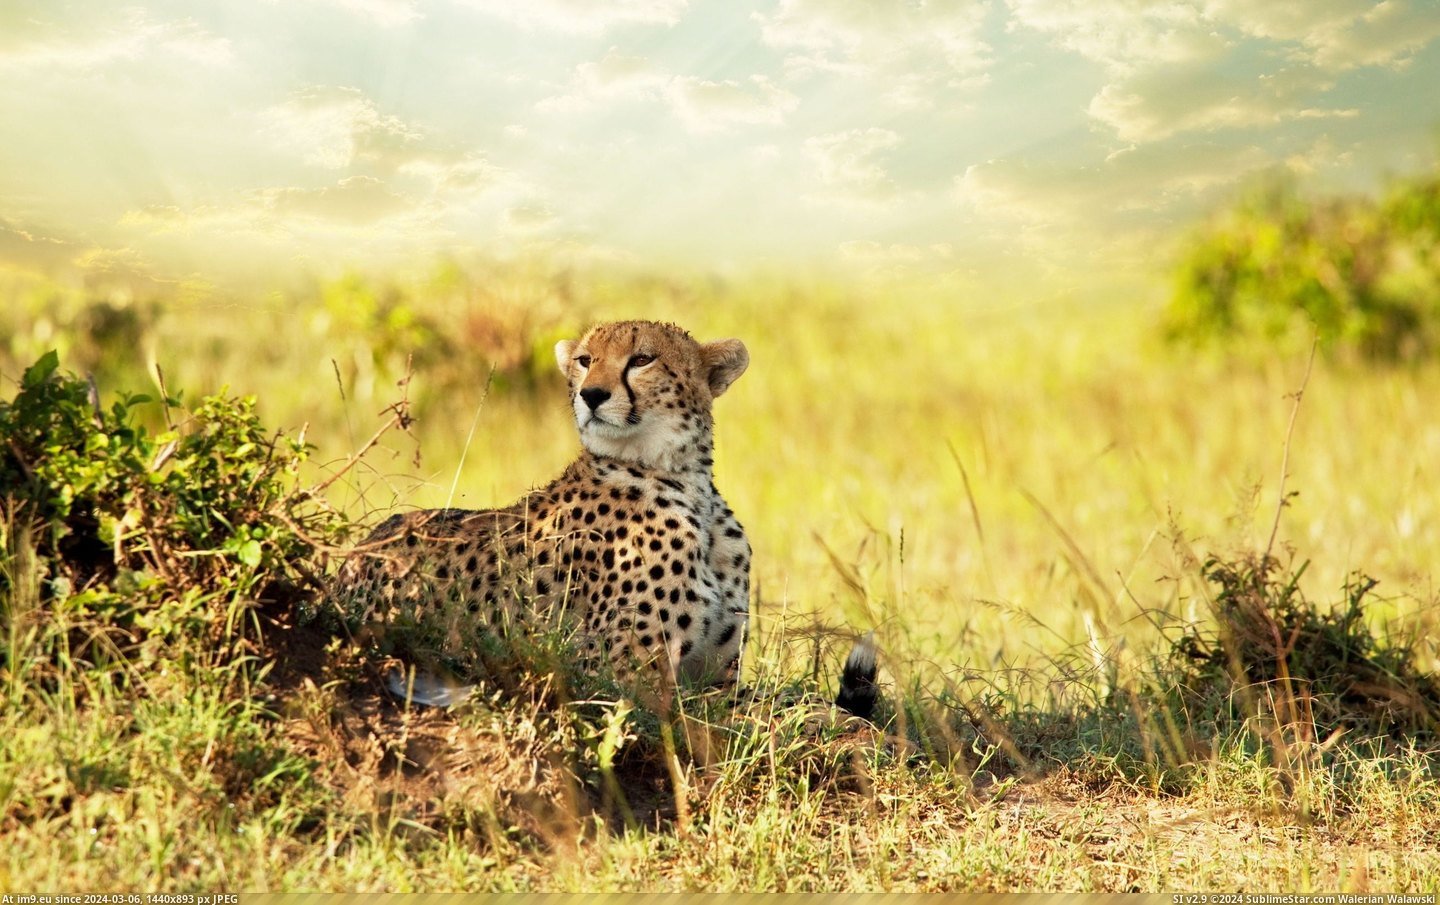 #Wallpaper #Wide #Savanna #Africa #Cheetah Cheetah Savanna Africa Wide HD Wallpaper Pic. (Obraz z album Unique HD Wallpapers))